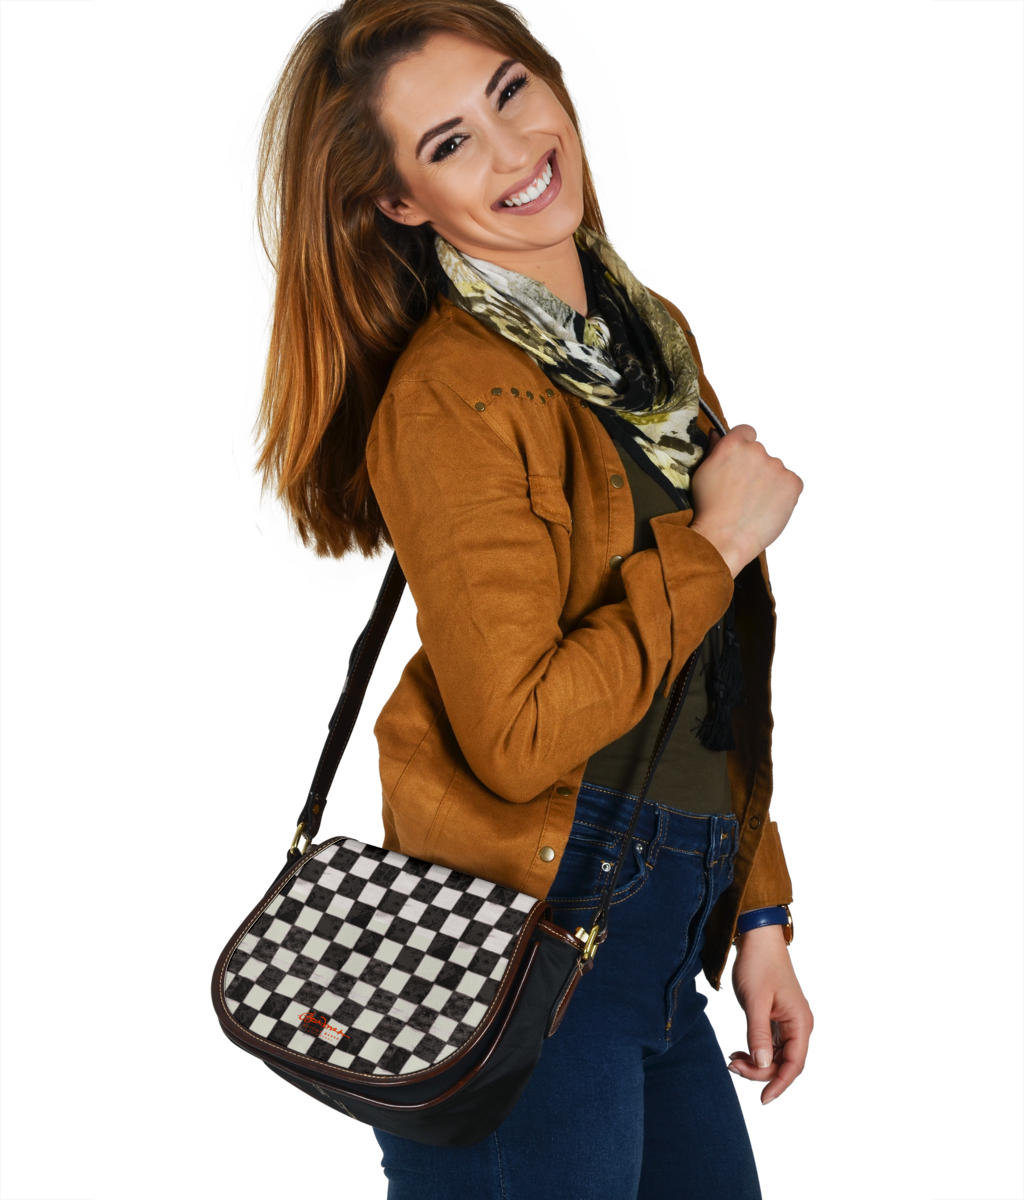 B&W Checkerboard Saddle Shoulder Bag